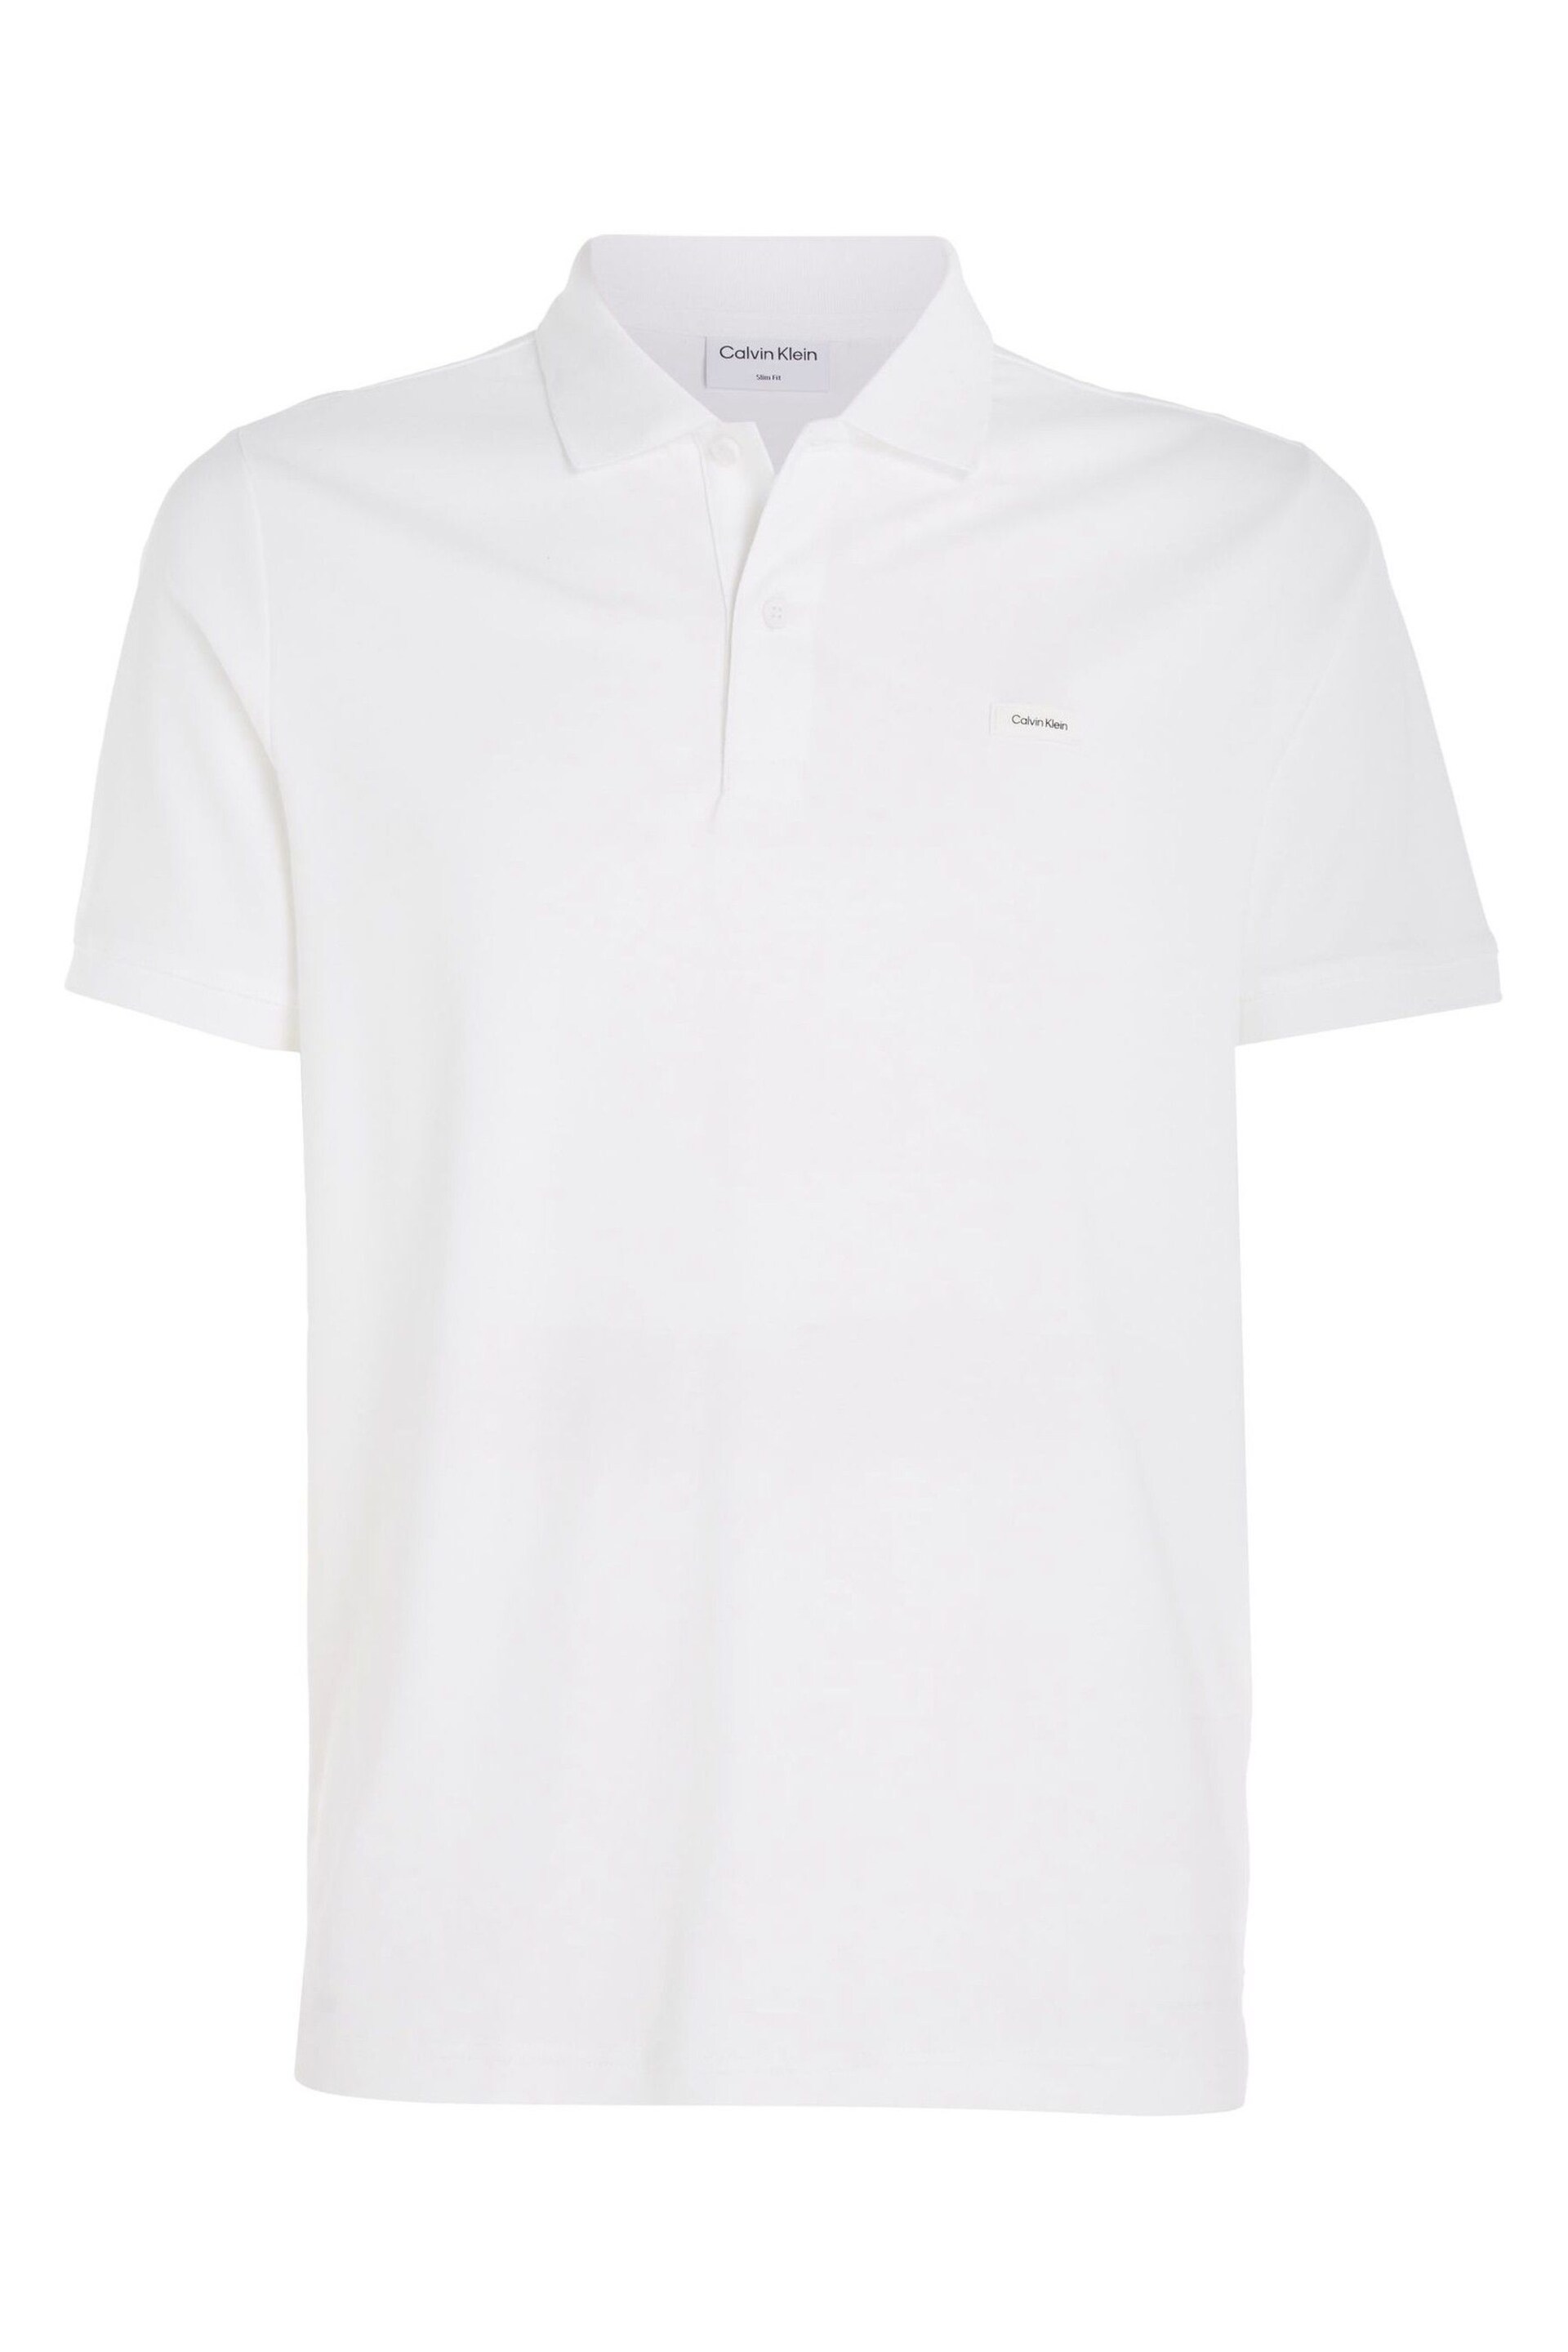 Calvin Klein White Slim Essential Smooth Cotton Polo Shirt - Image 4 of 5